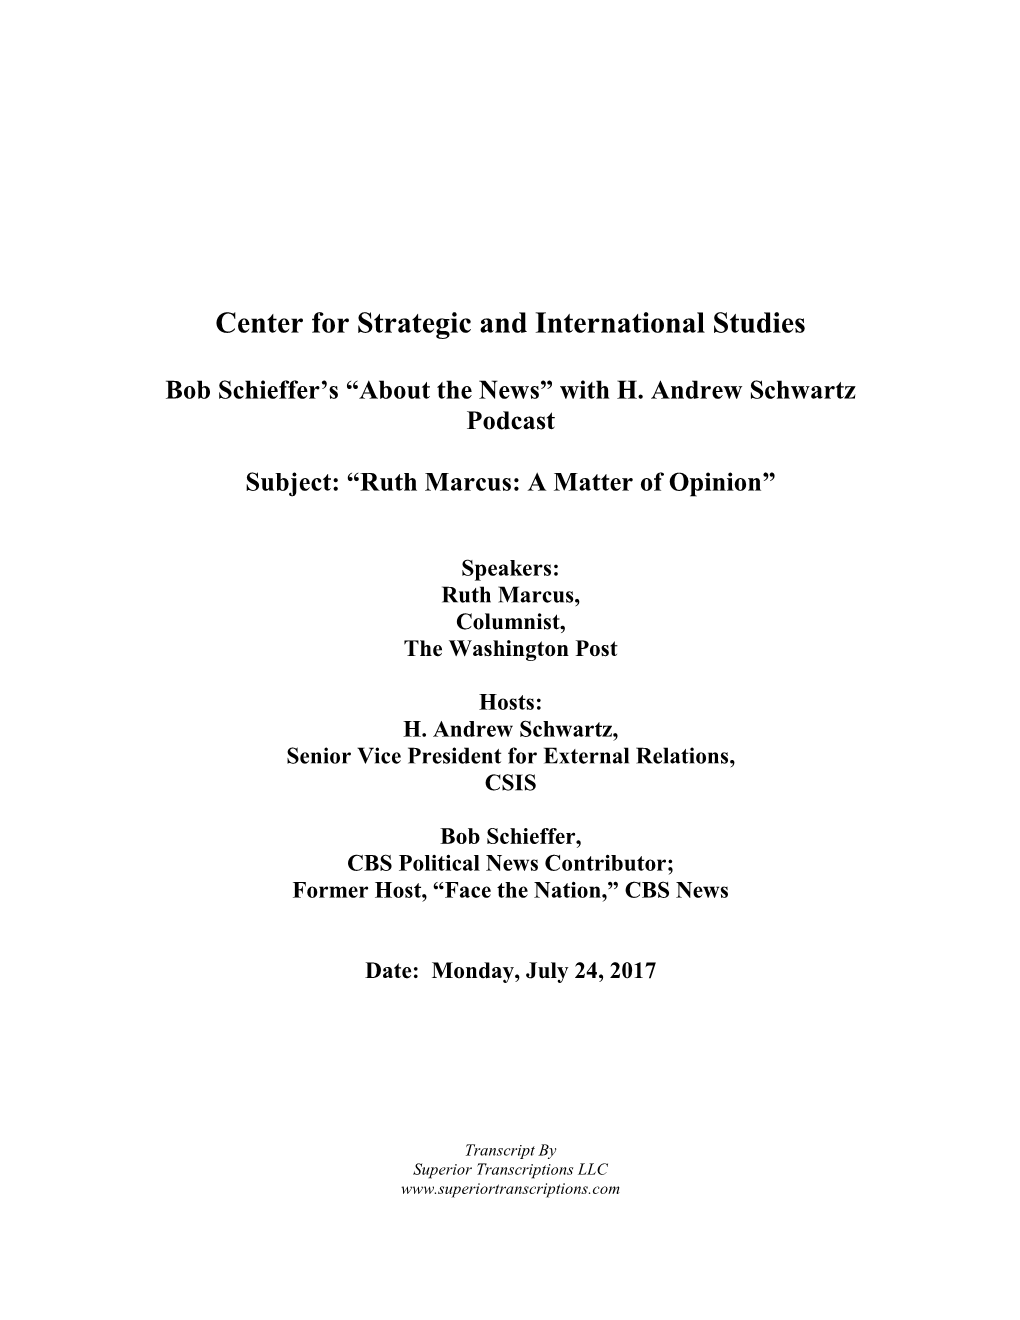 Center for Strategic and International Studies Bob Schieffer's